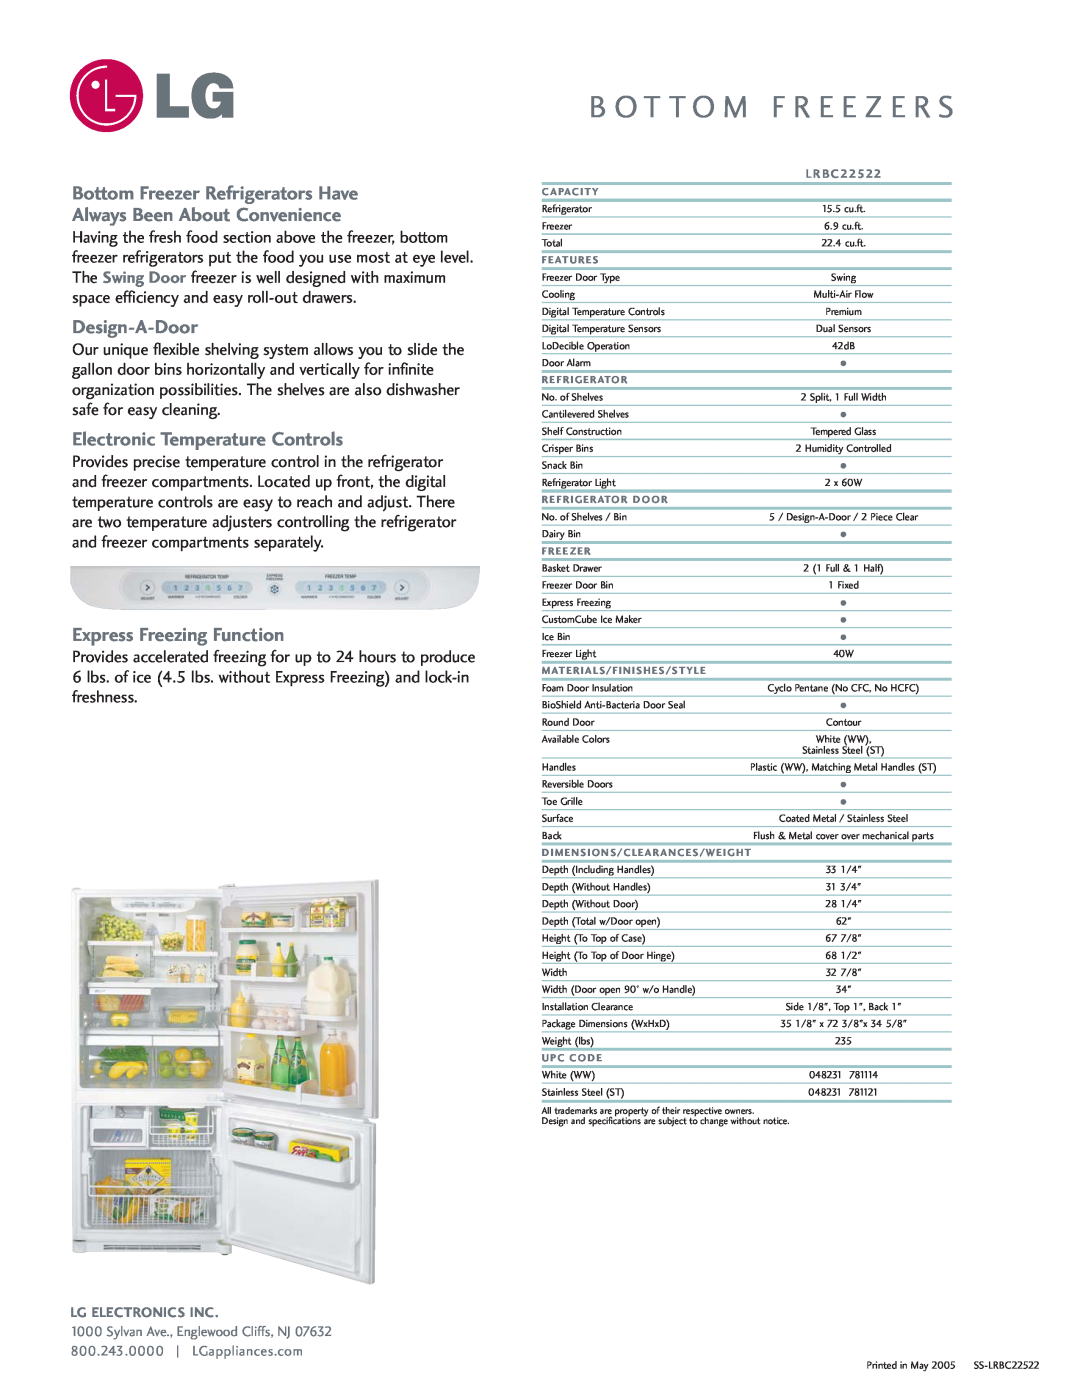 LG Electronics LRBC22522 manual Bottom Freezer Refrigerators Have, Always Been About Convenience, Design-A-Door 